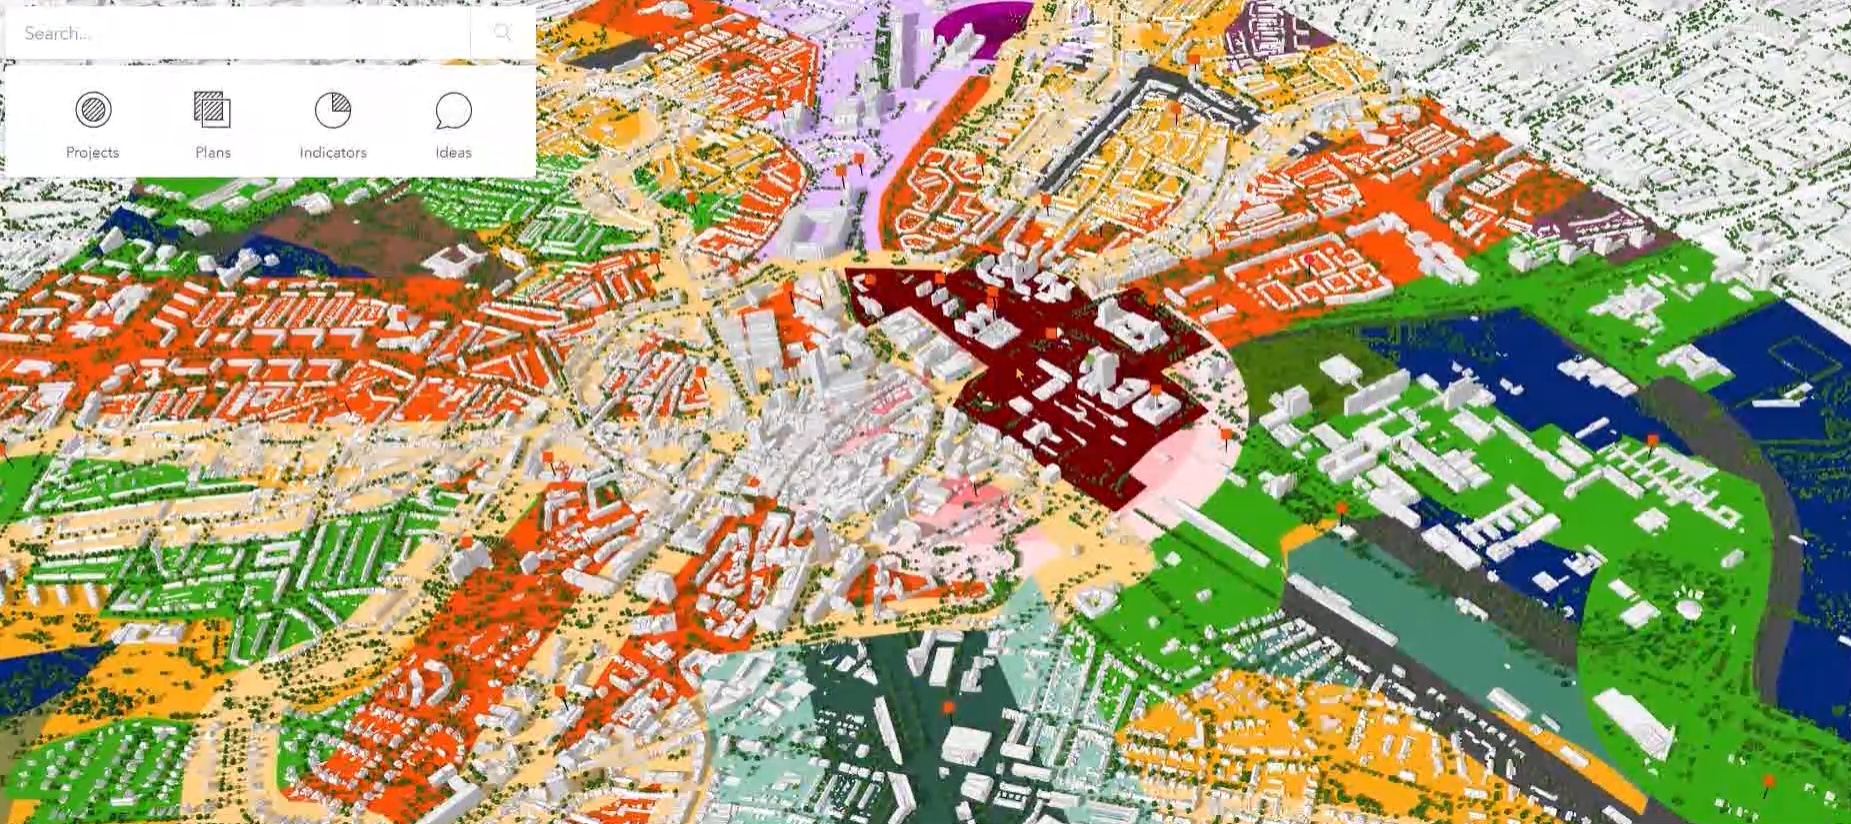 2021.02.18-Screenshot-Brainport-Eindhoven.jpg